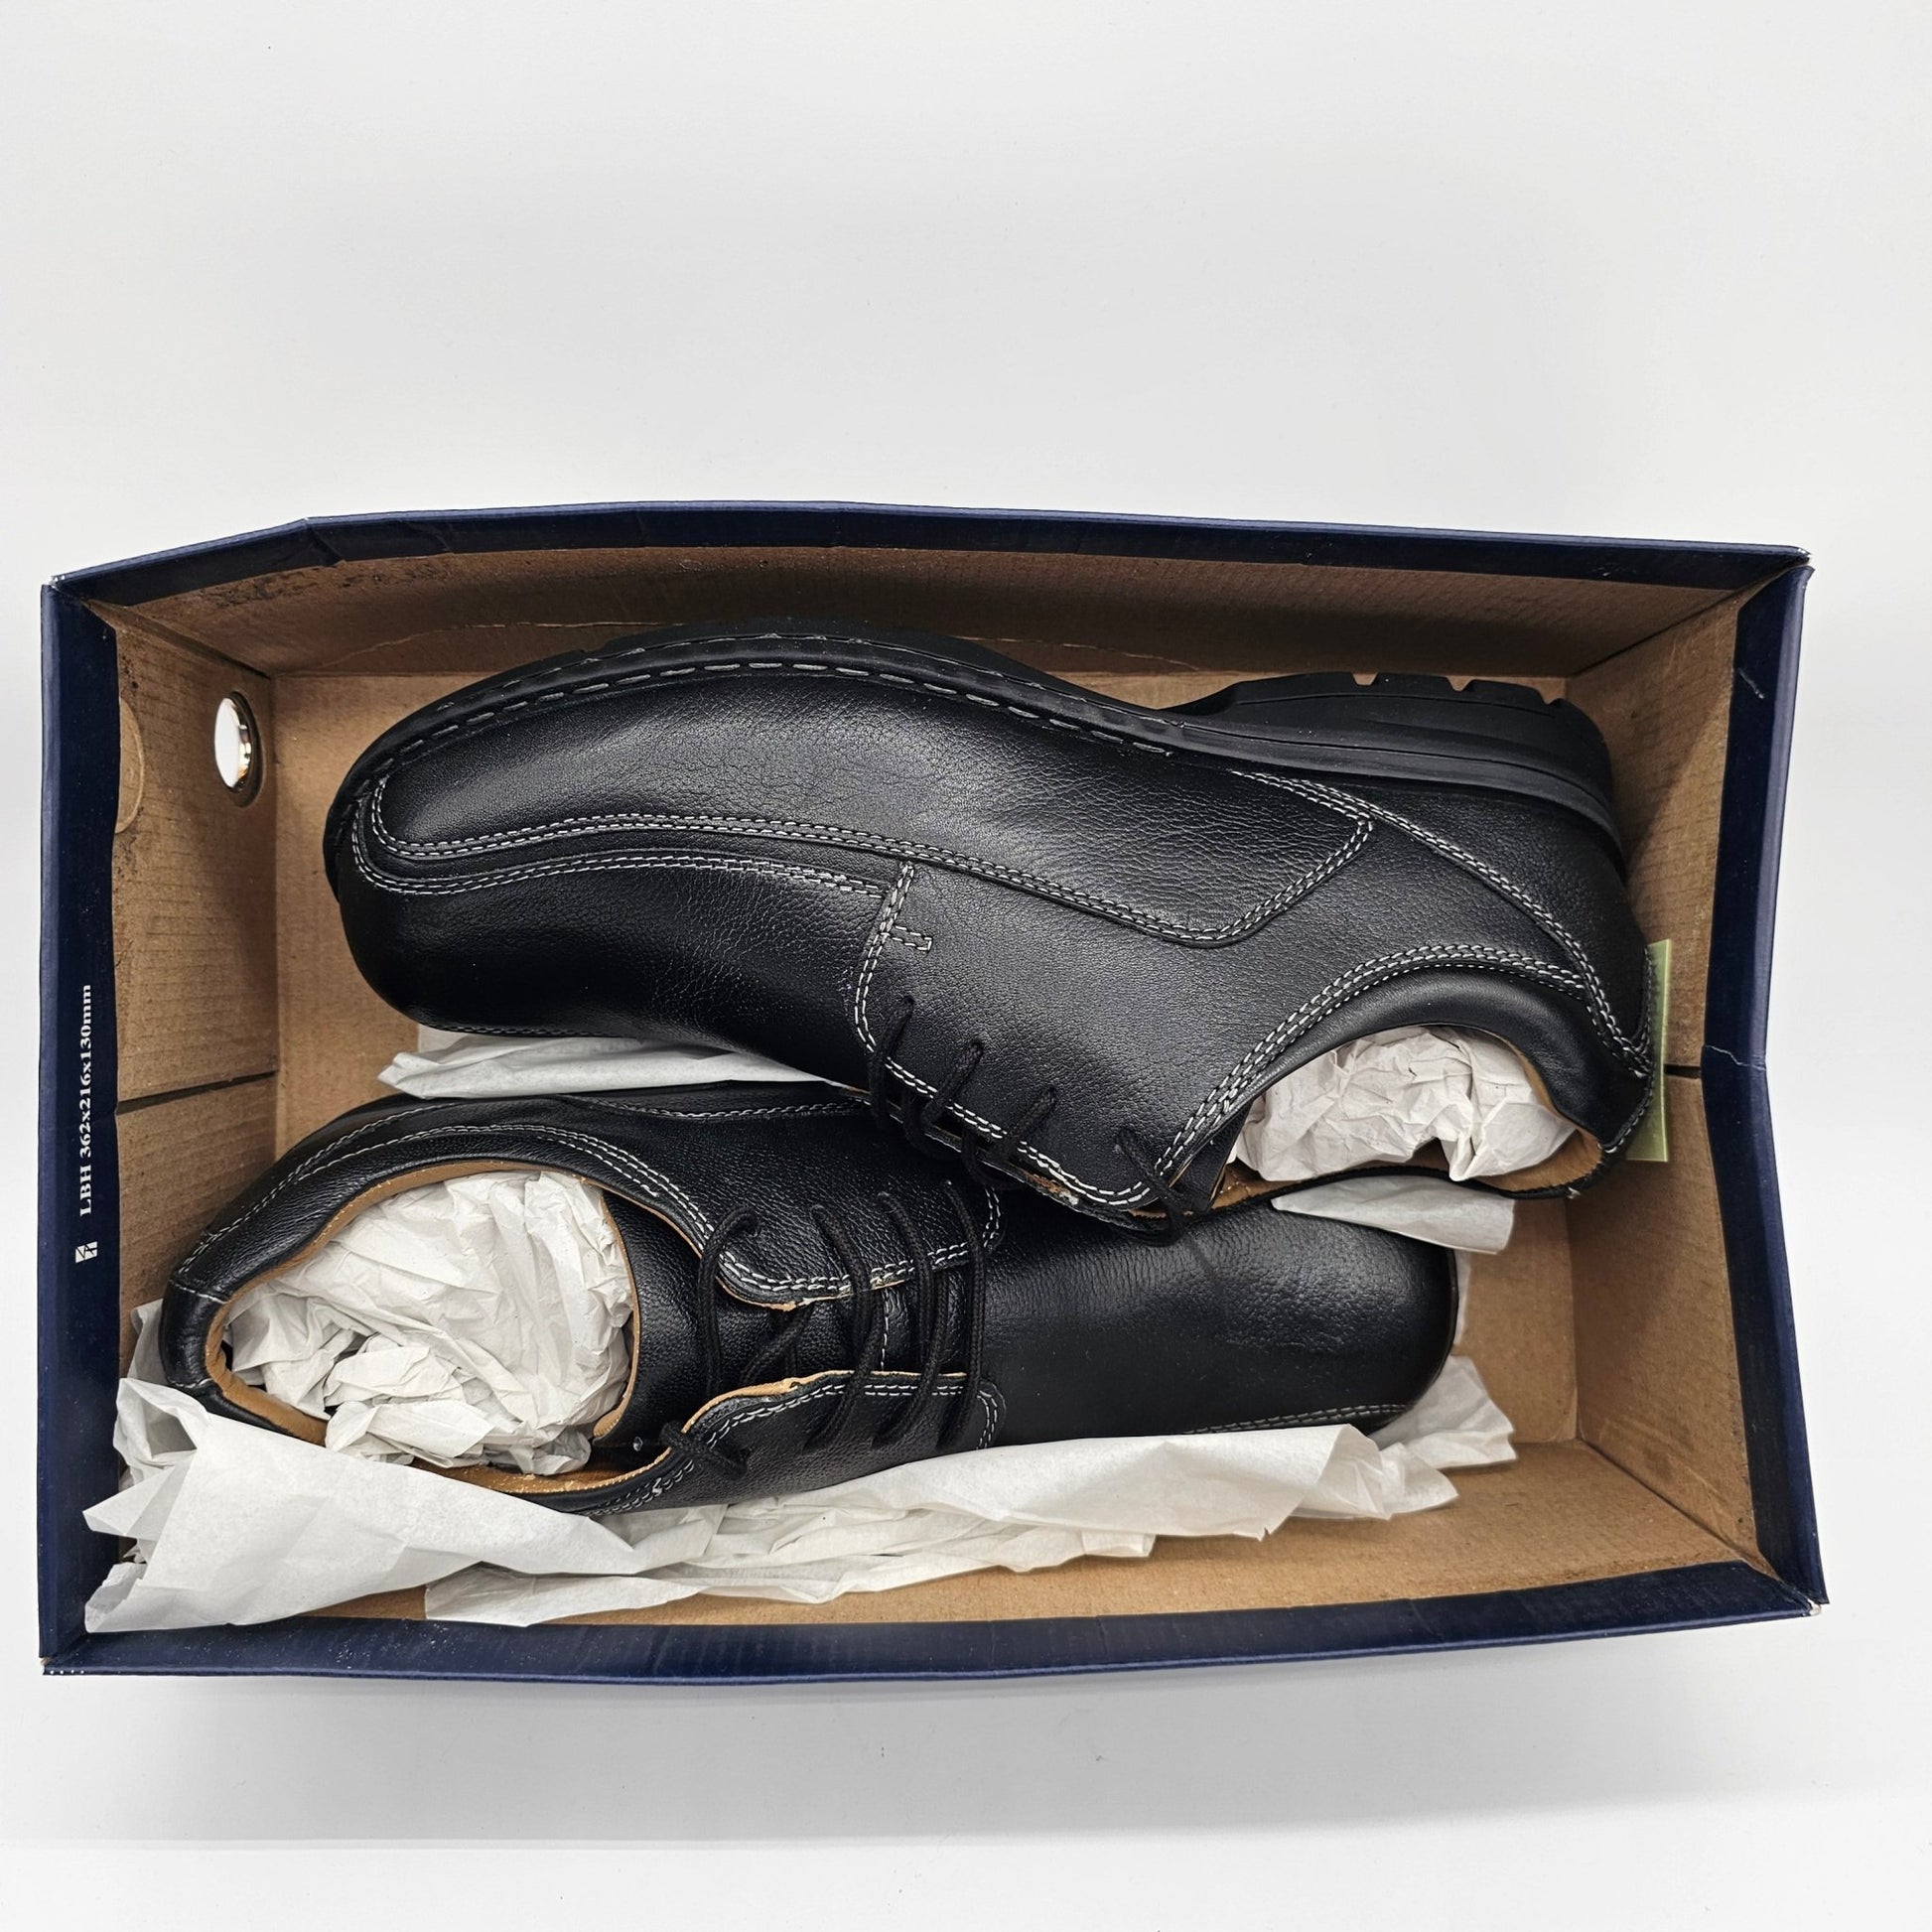 Dockers Men’s Trustee Leather Oxford Dress Shoe, Black, 11.5 M US - DQ Distribution